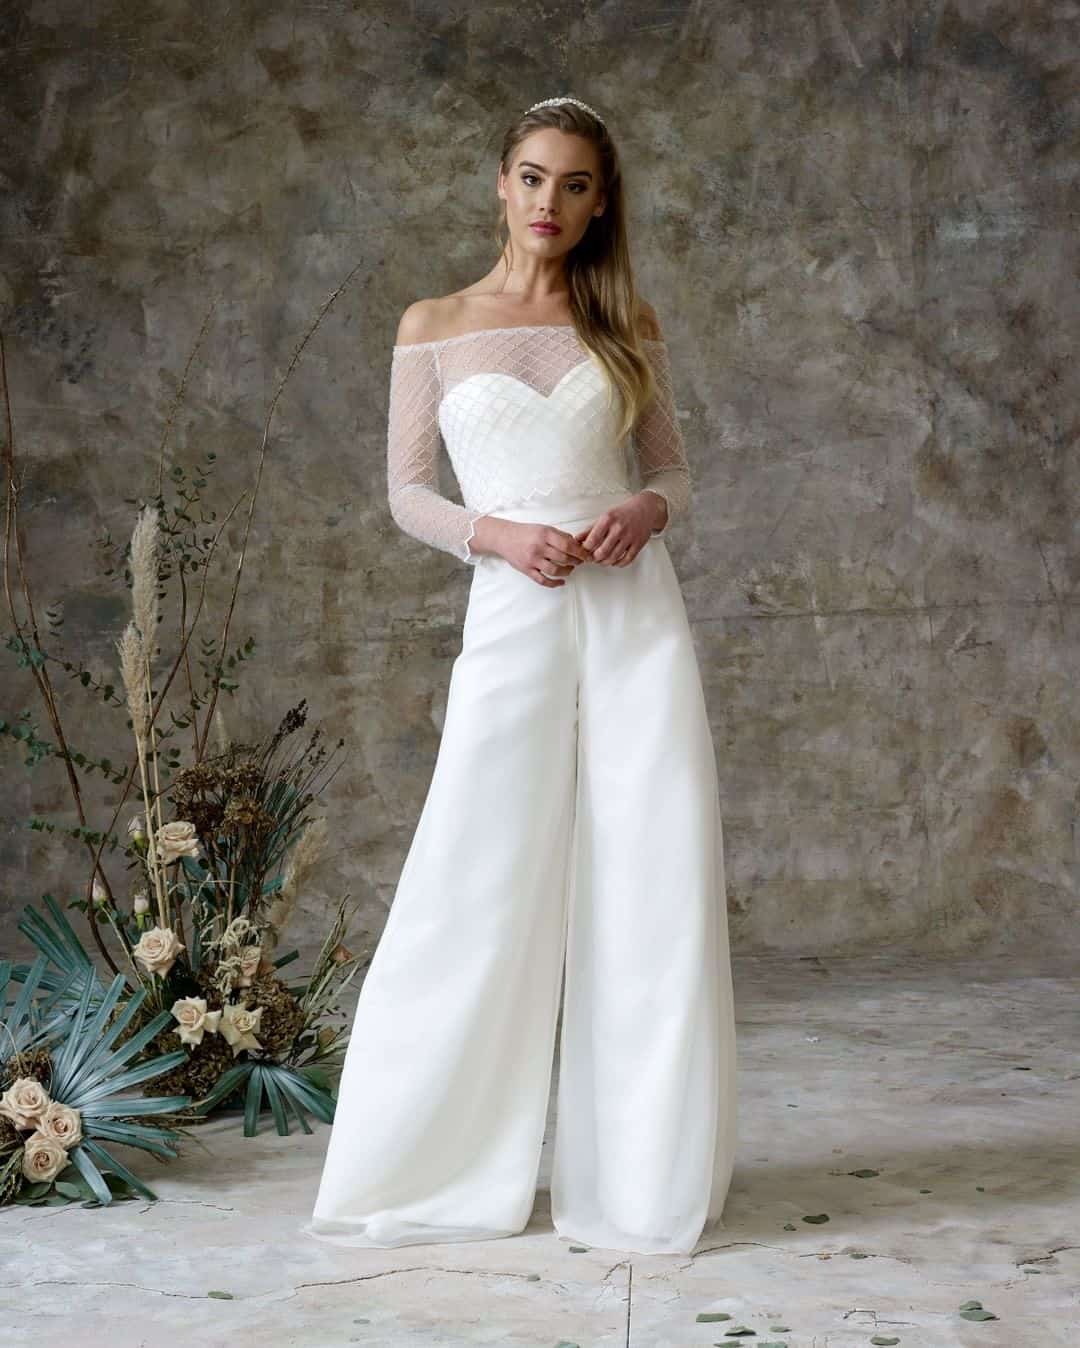 February 2020 - Winter wedding dress